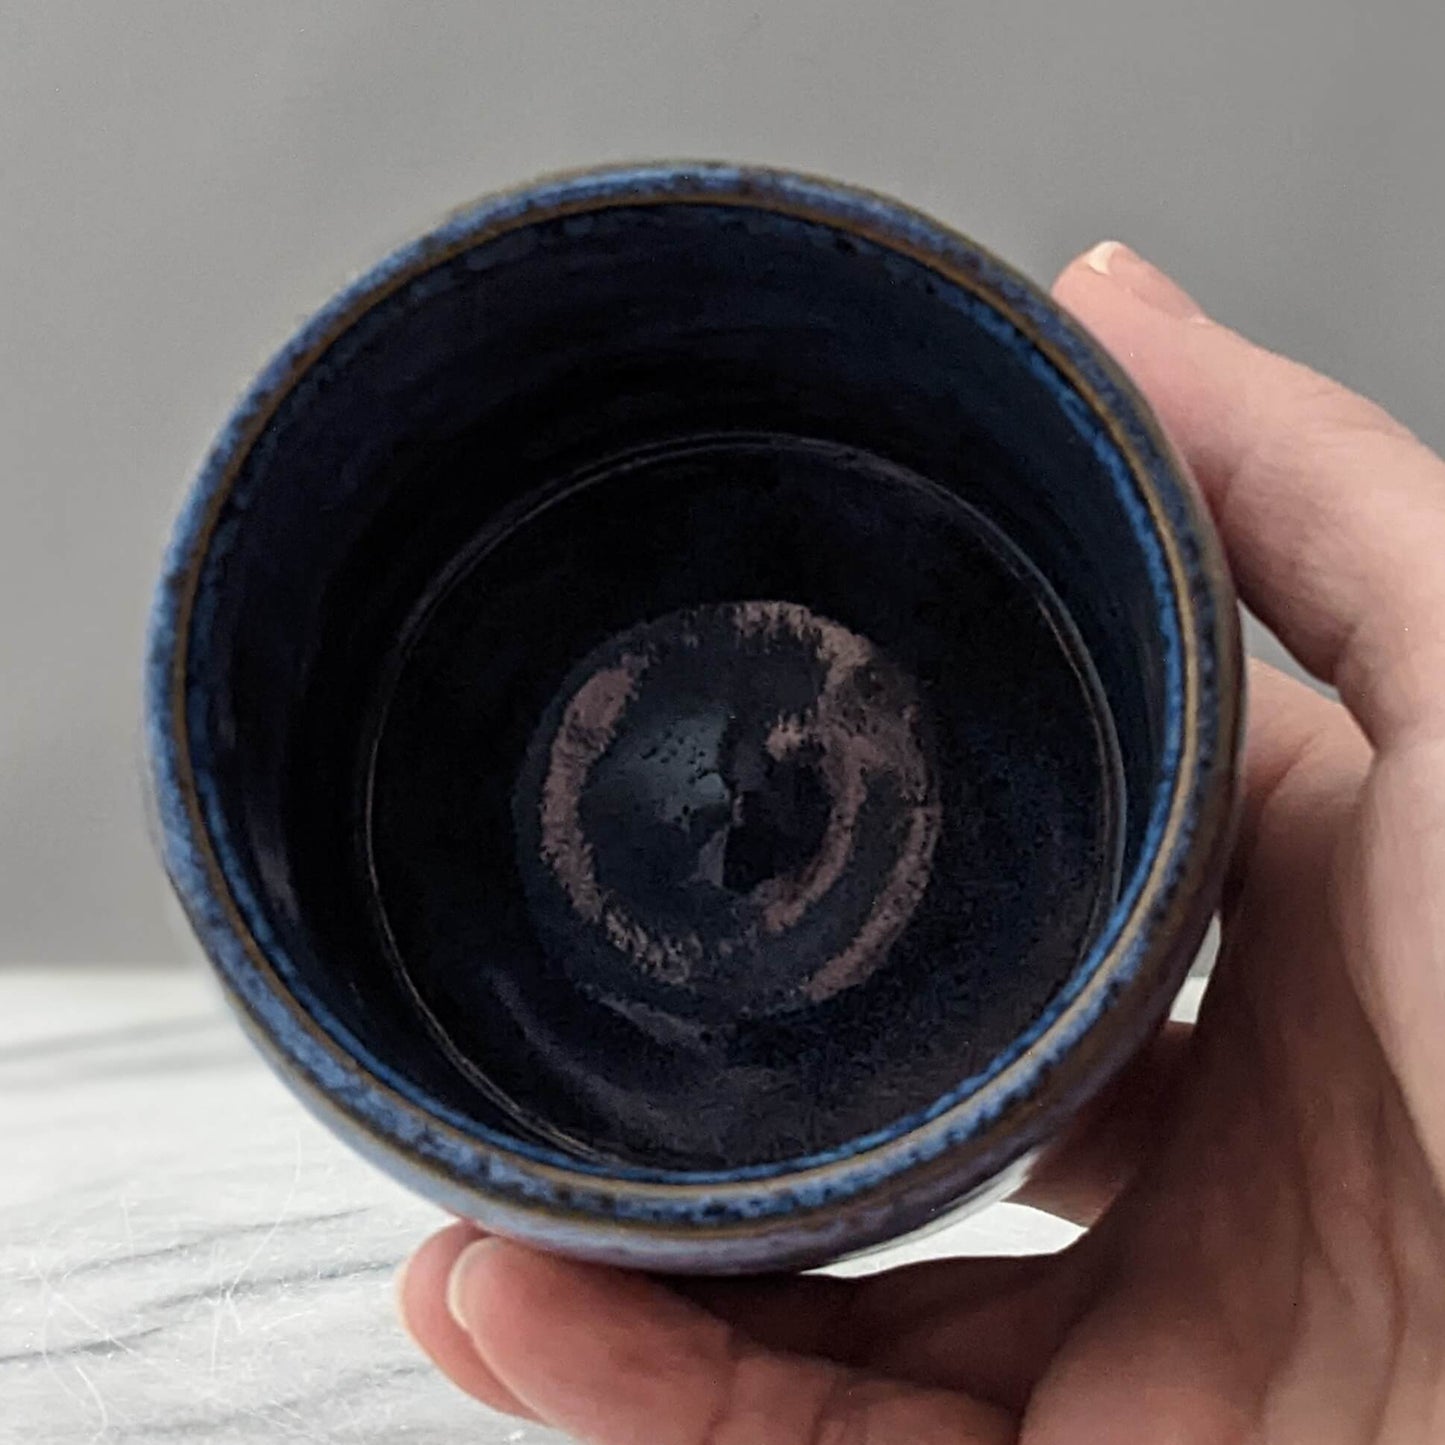 Lidded Ceramic Jar in Blue